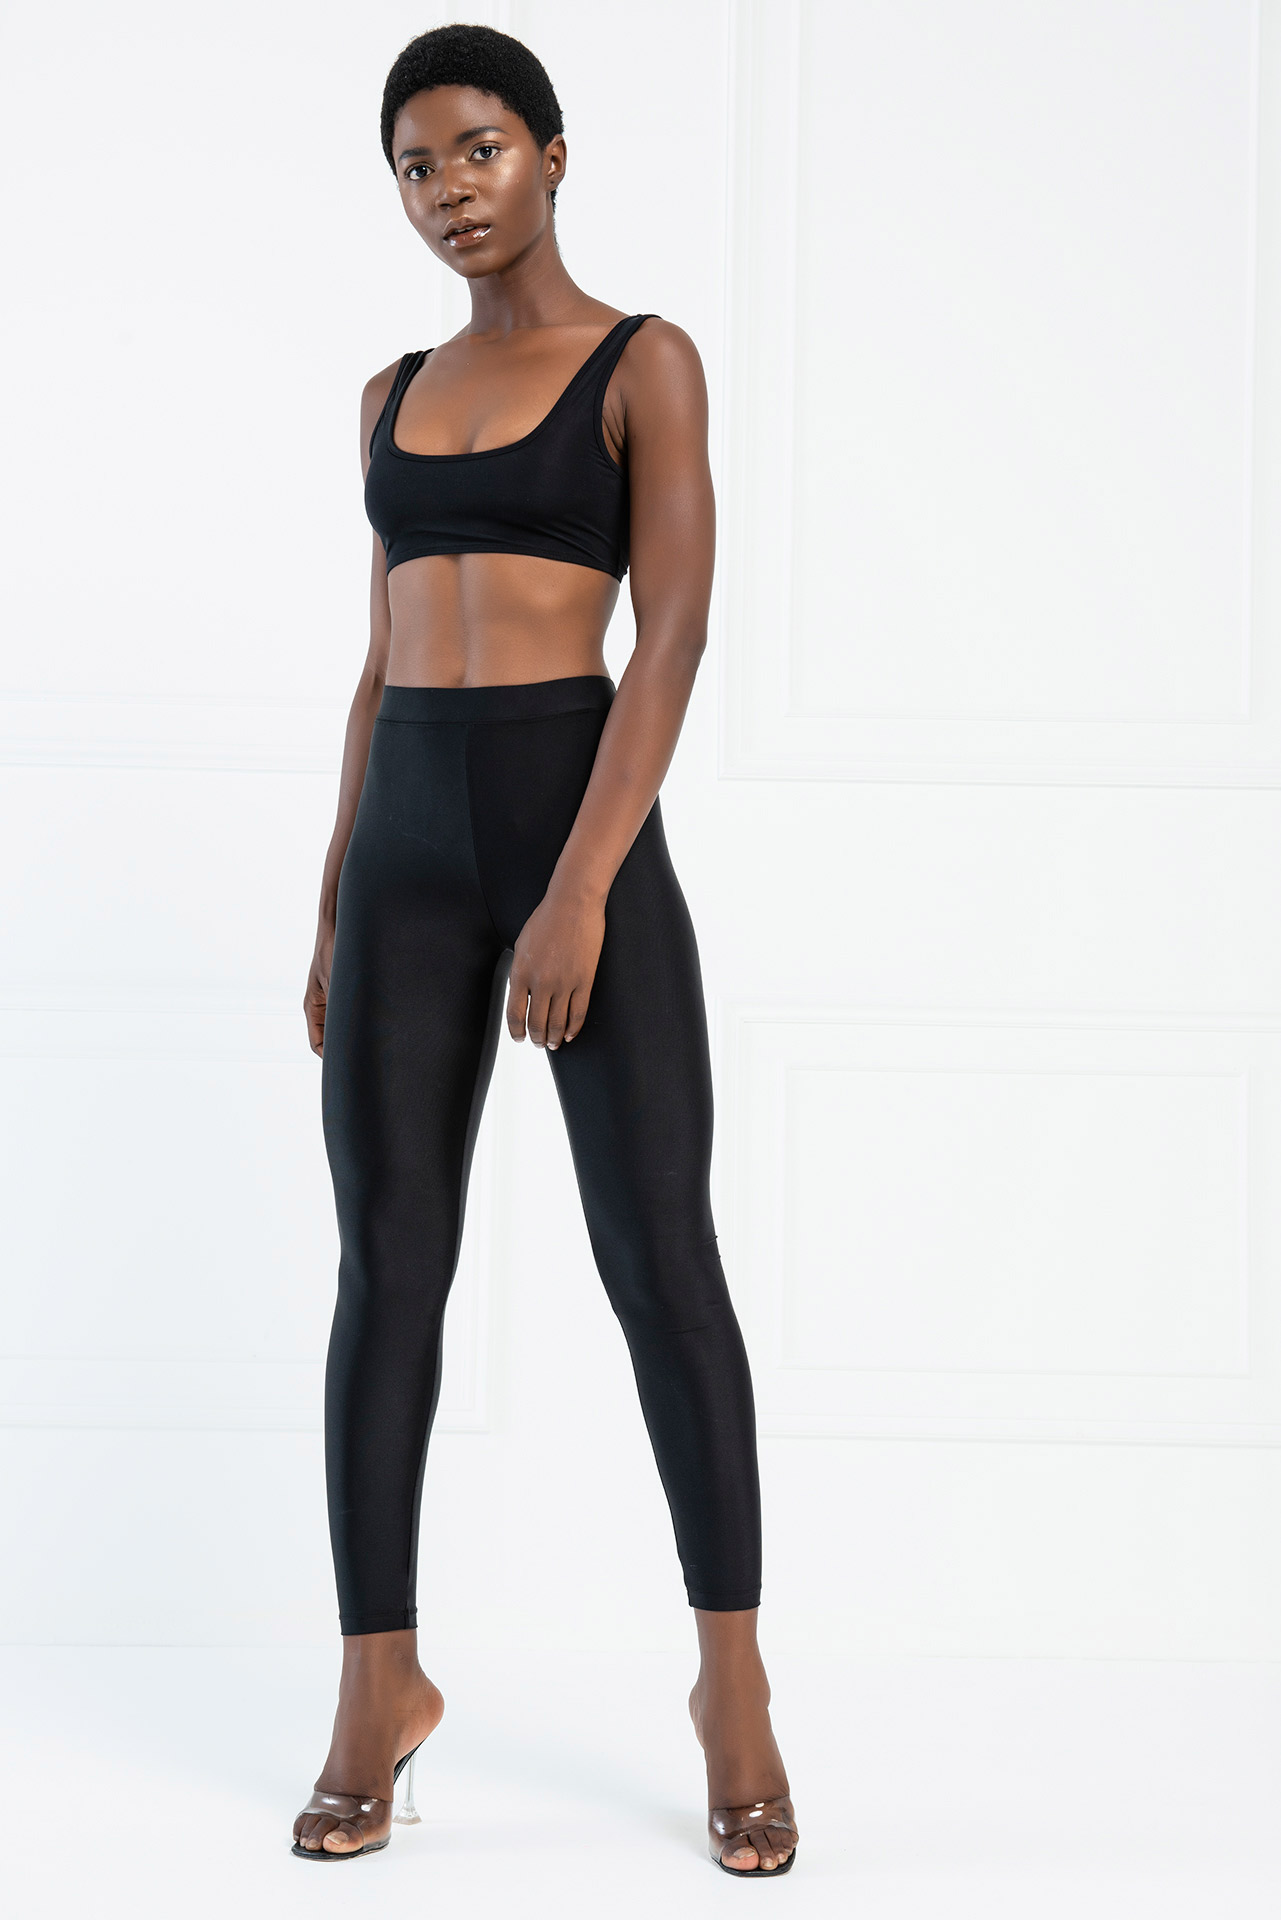 Black Brilliant Wet Look Black Glossy Opaque Leggings at Ireland's Online  Shop – DressMyLegs